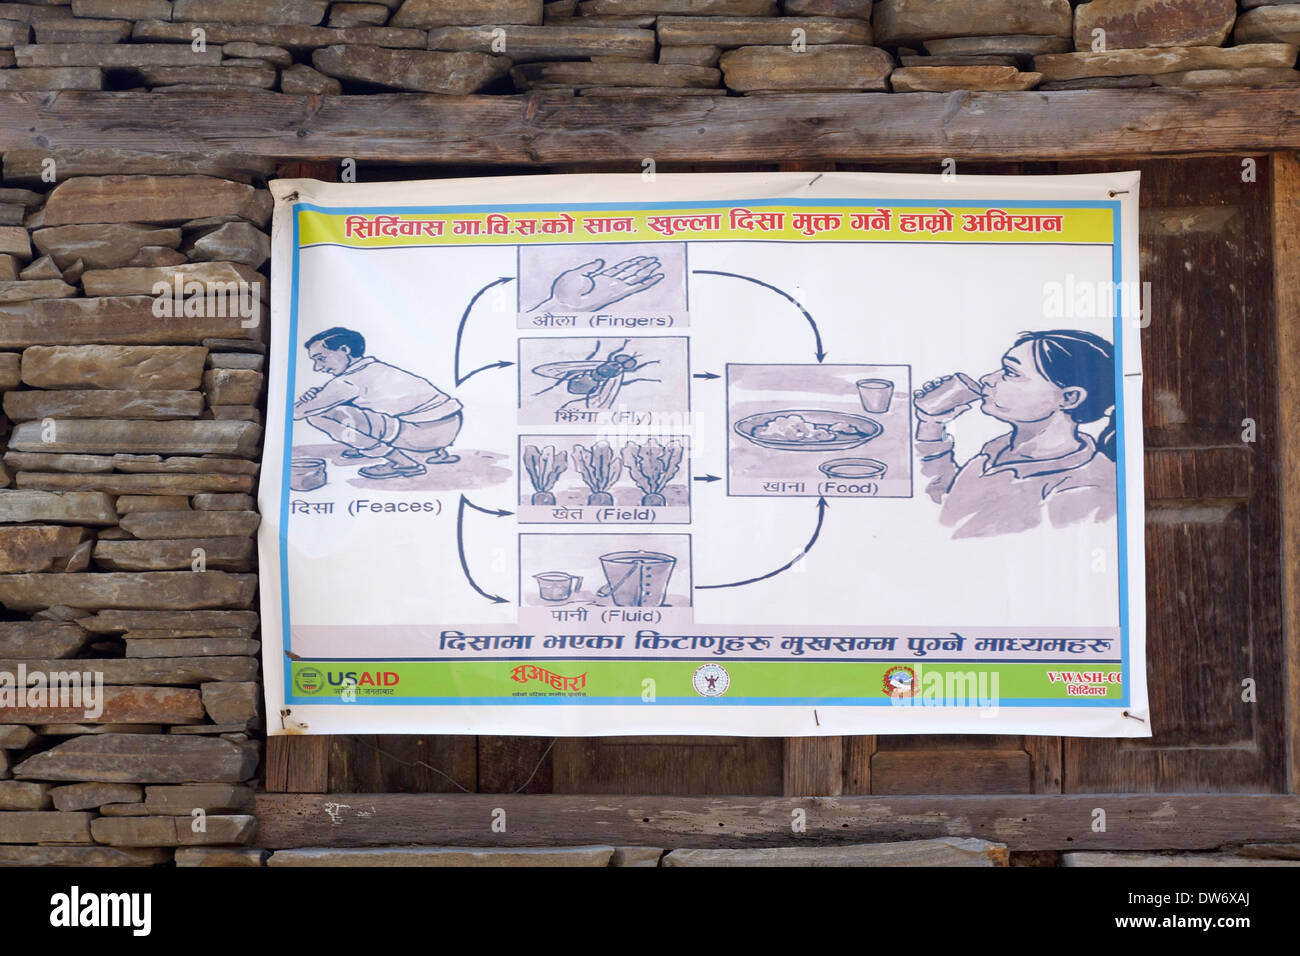 US-Hilfe Hygiene Plakat im Dorf Jagat, Nepal. Stockfoto